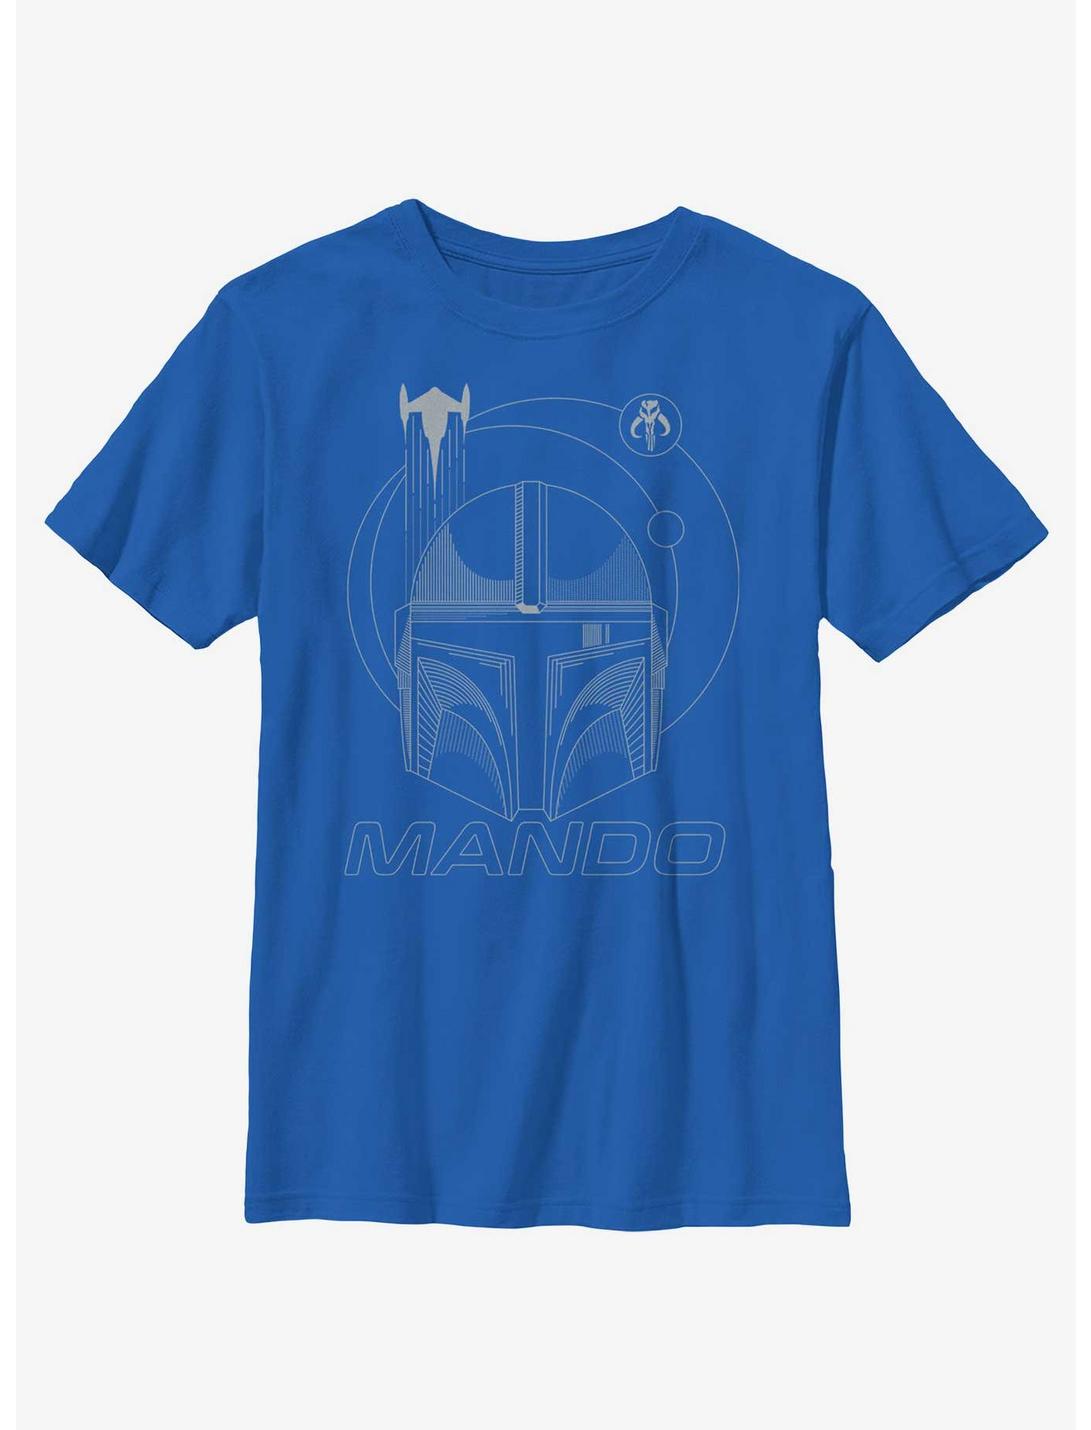 Star Wars The Mandalorian Mando Line Art Youth T-Shirt, ROYAL, hi-res